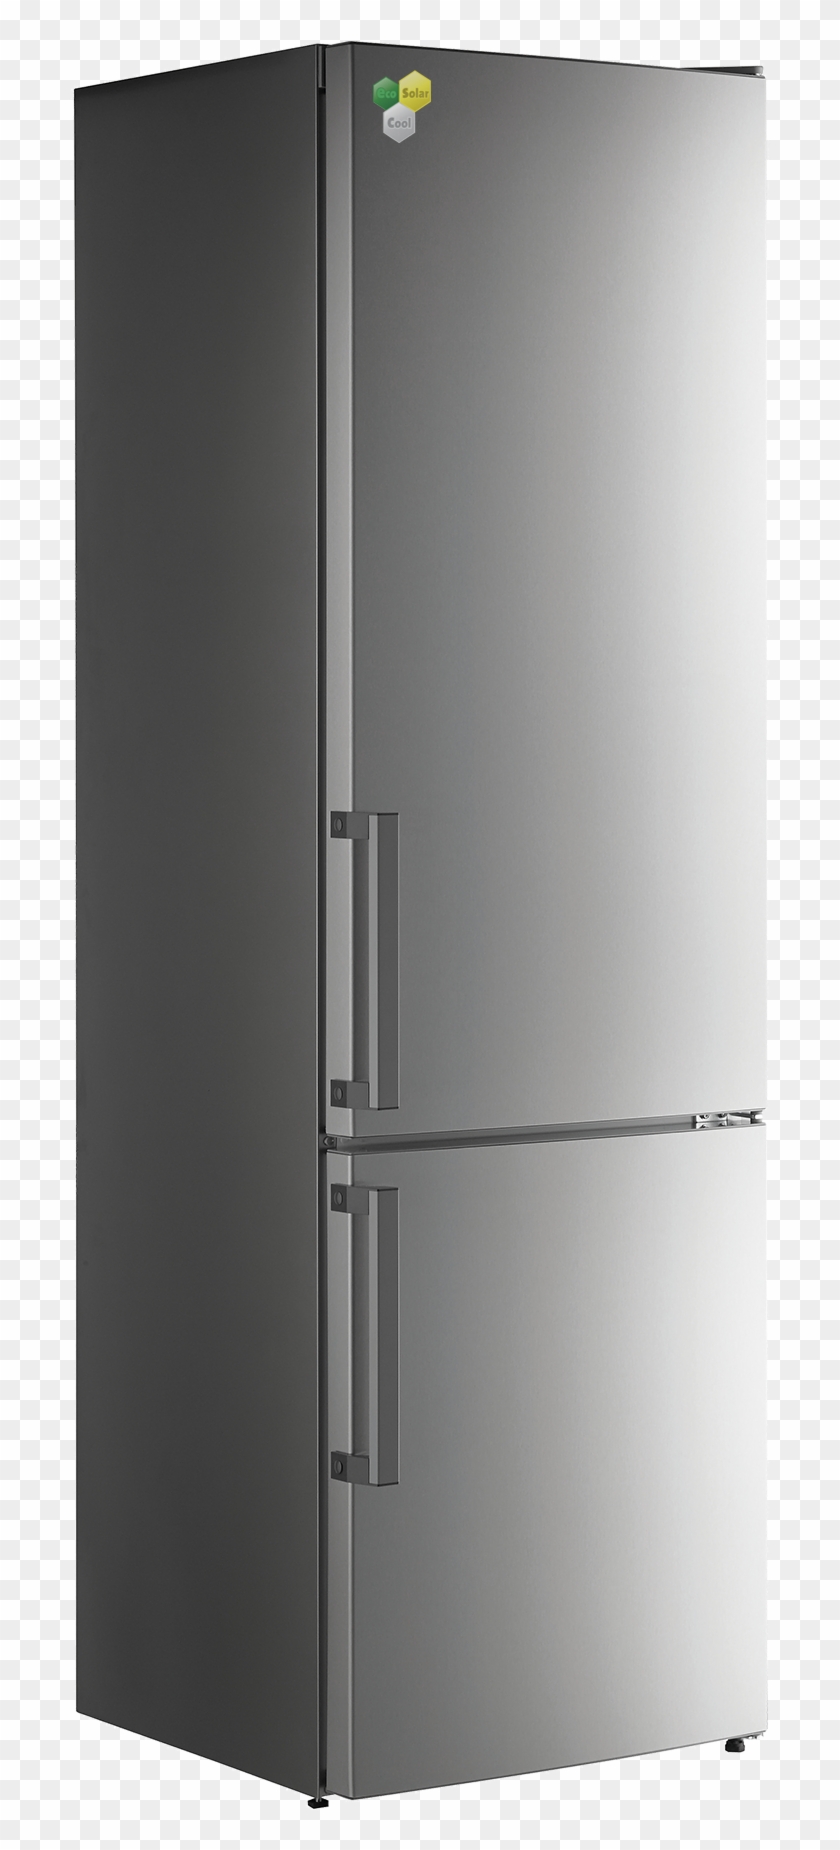 Transparent Fridge Stainless Steel - Refrigerator Clipart #1512033